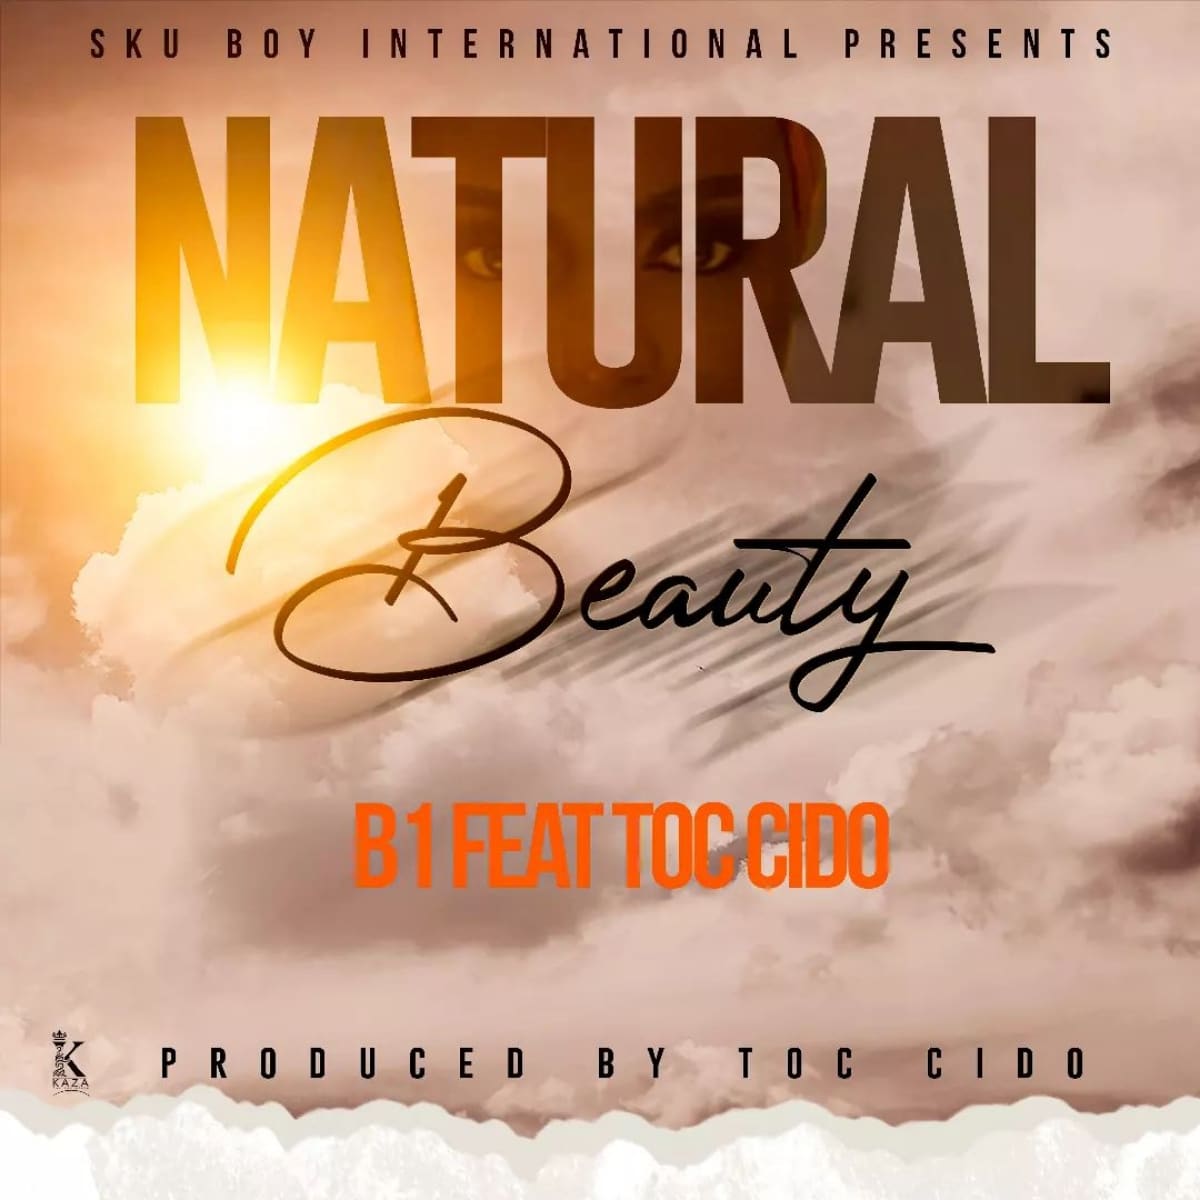 DOWNLOAD: B1 Ft. Tok Cido – “Natural Beauty” Mp3